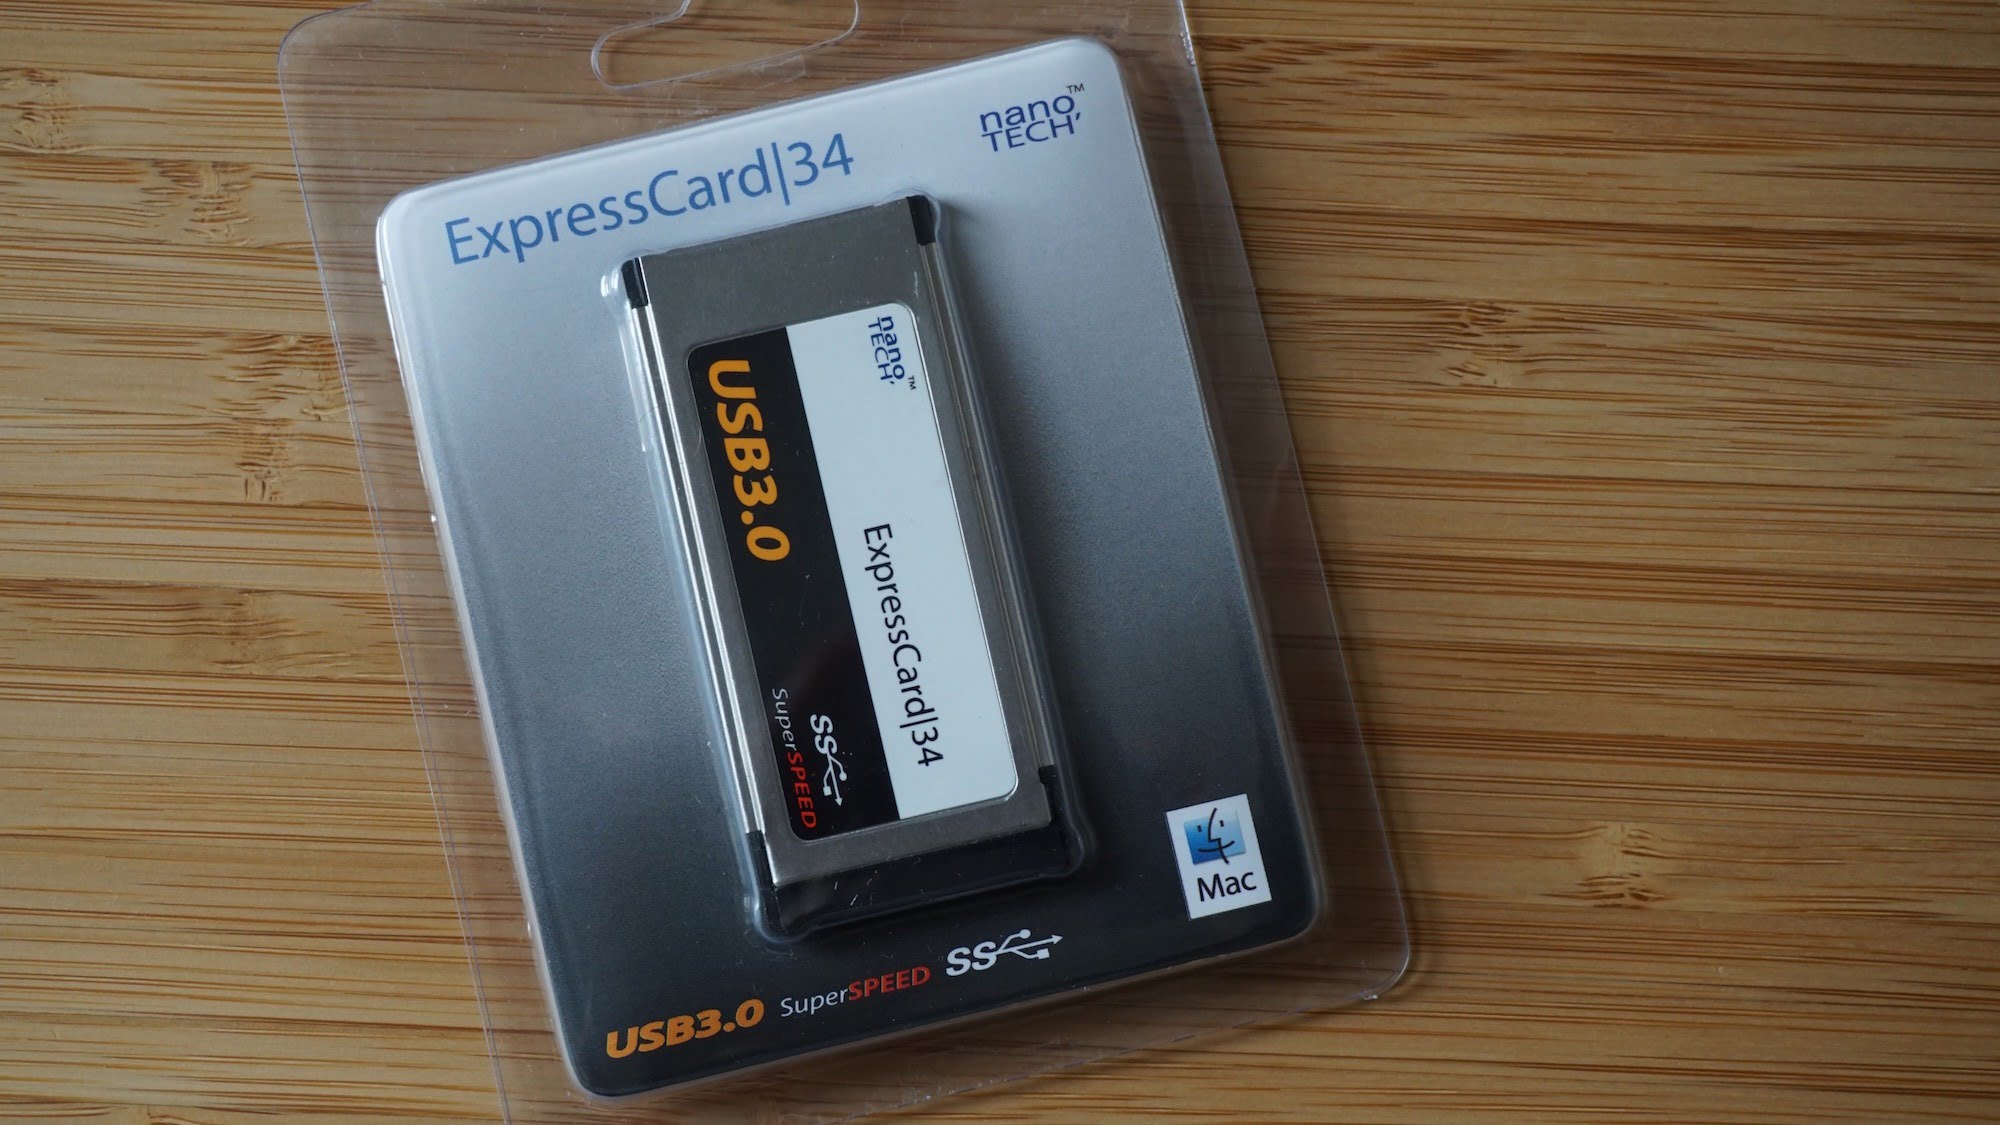 usb 3.0 expresscard 34 for mac